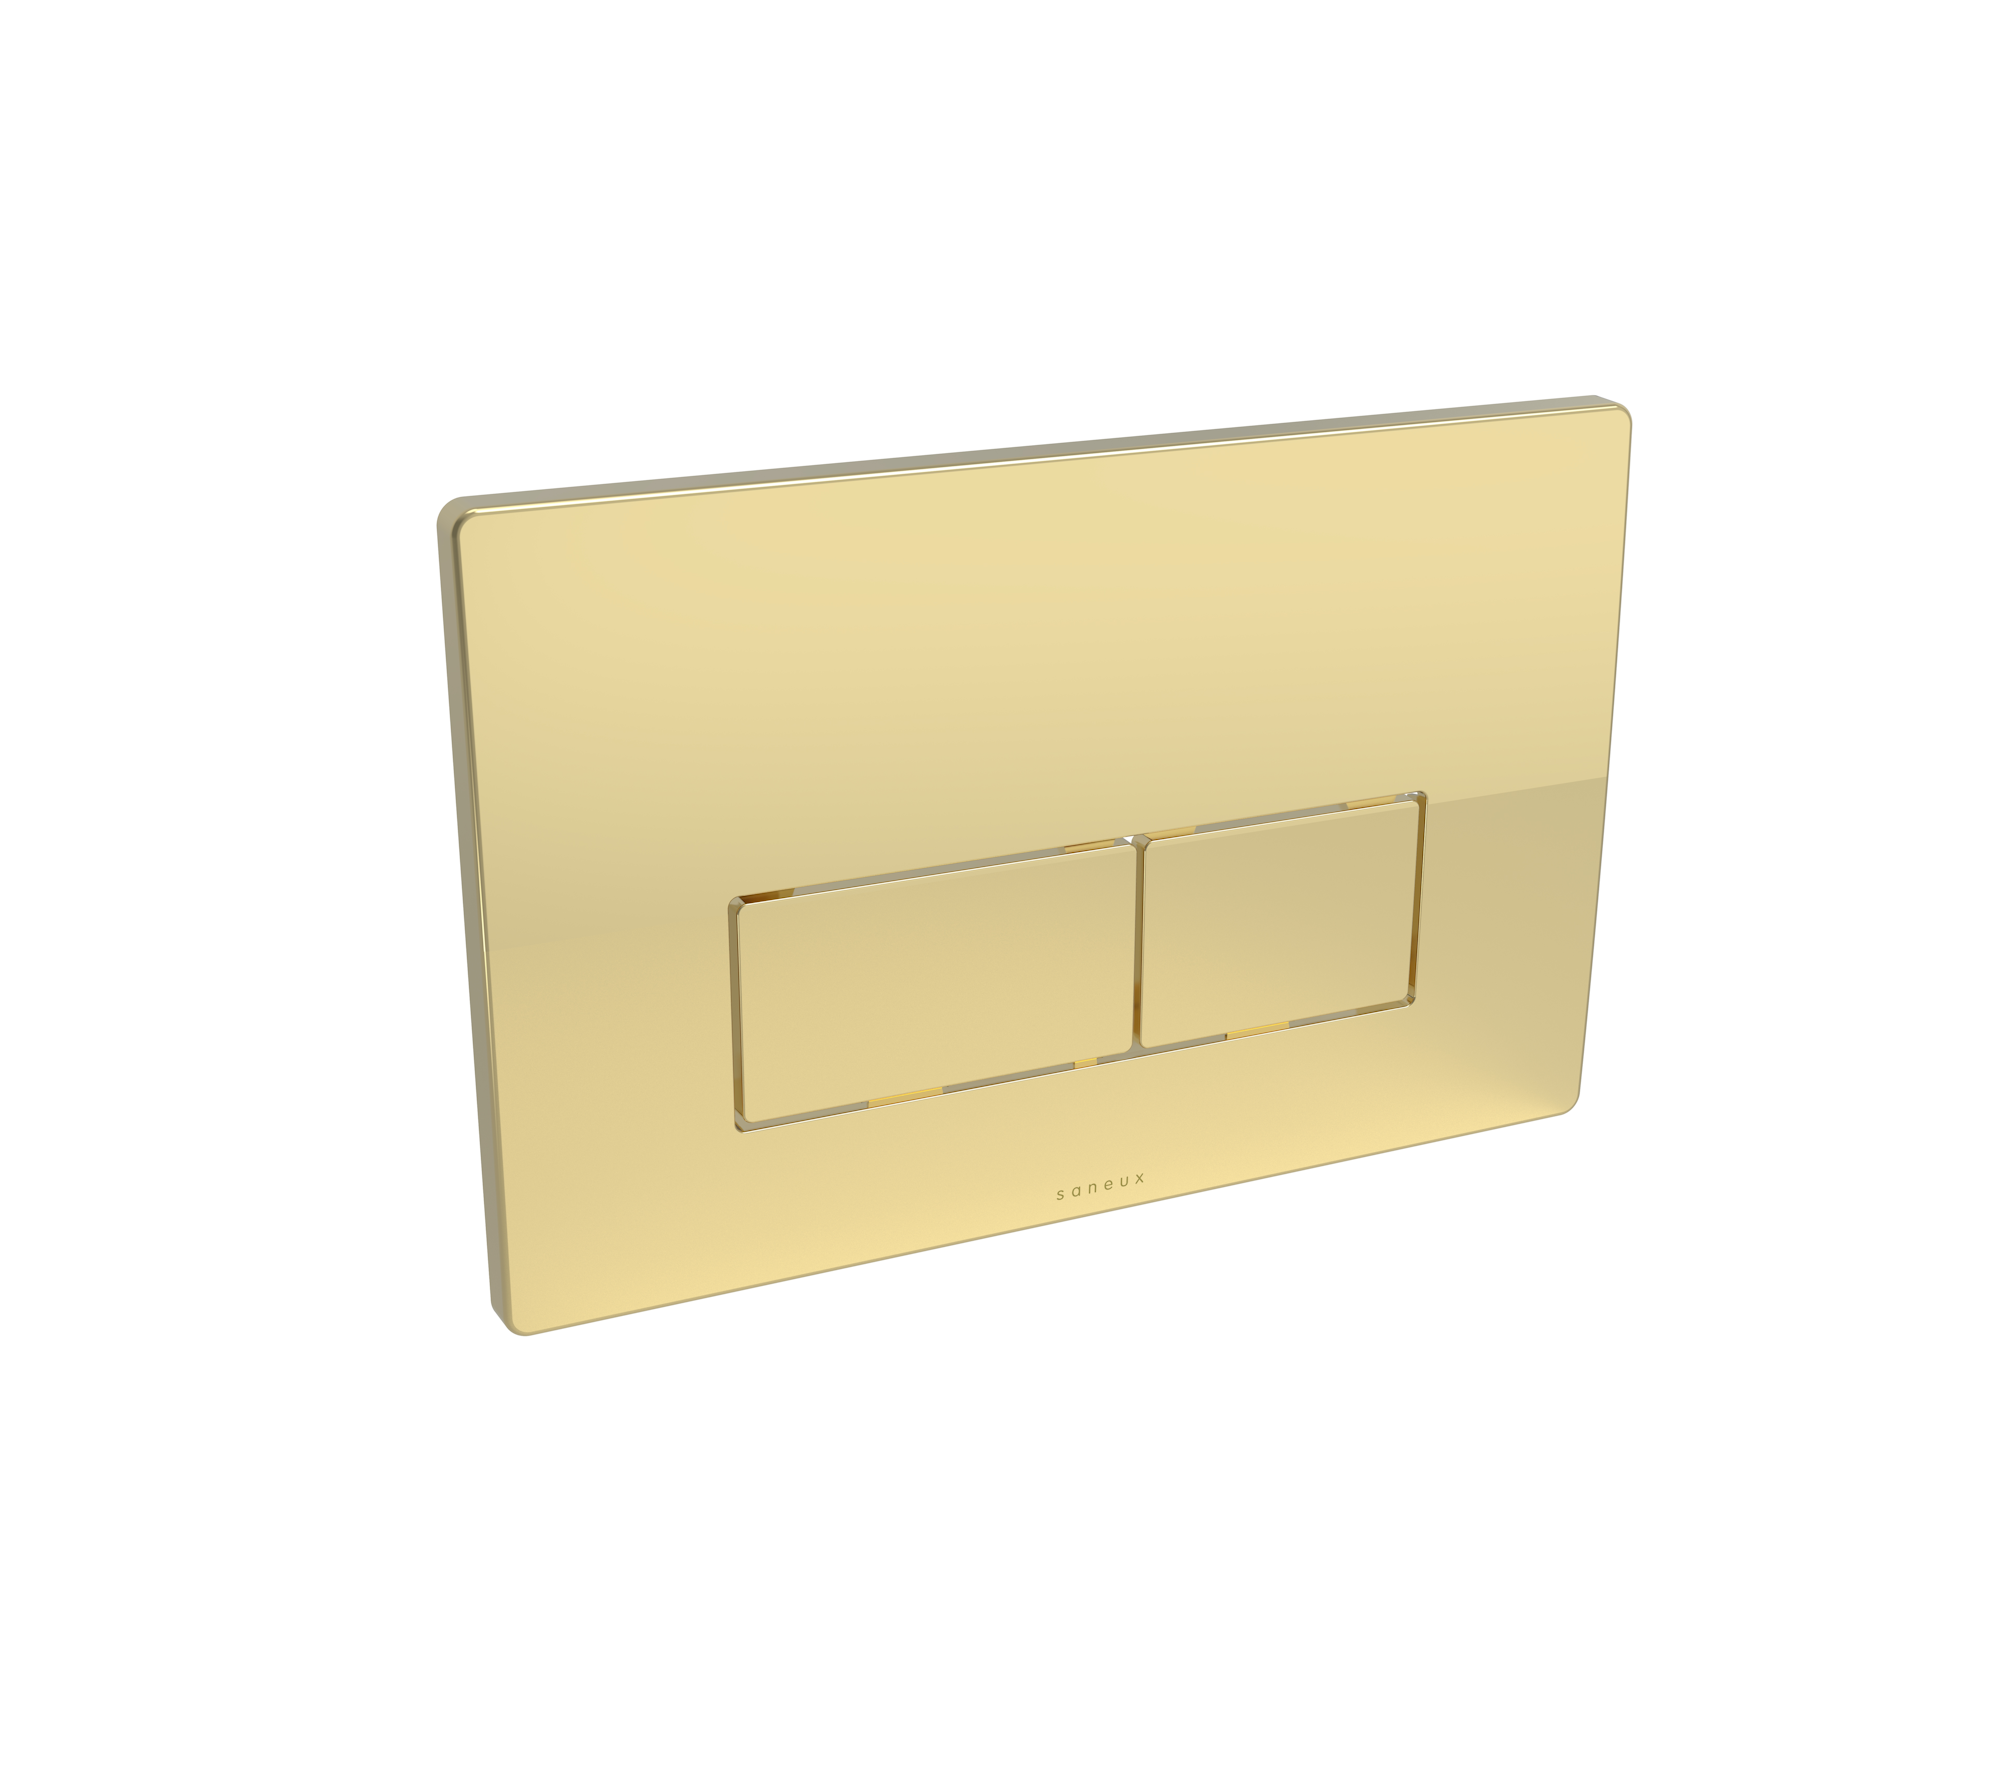 FLUSHE 2.0 square flush plate - Brushed Brass